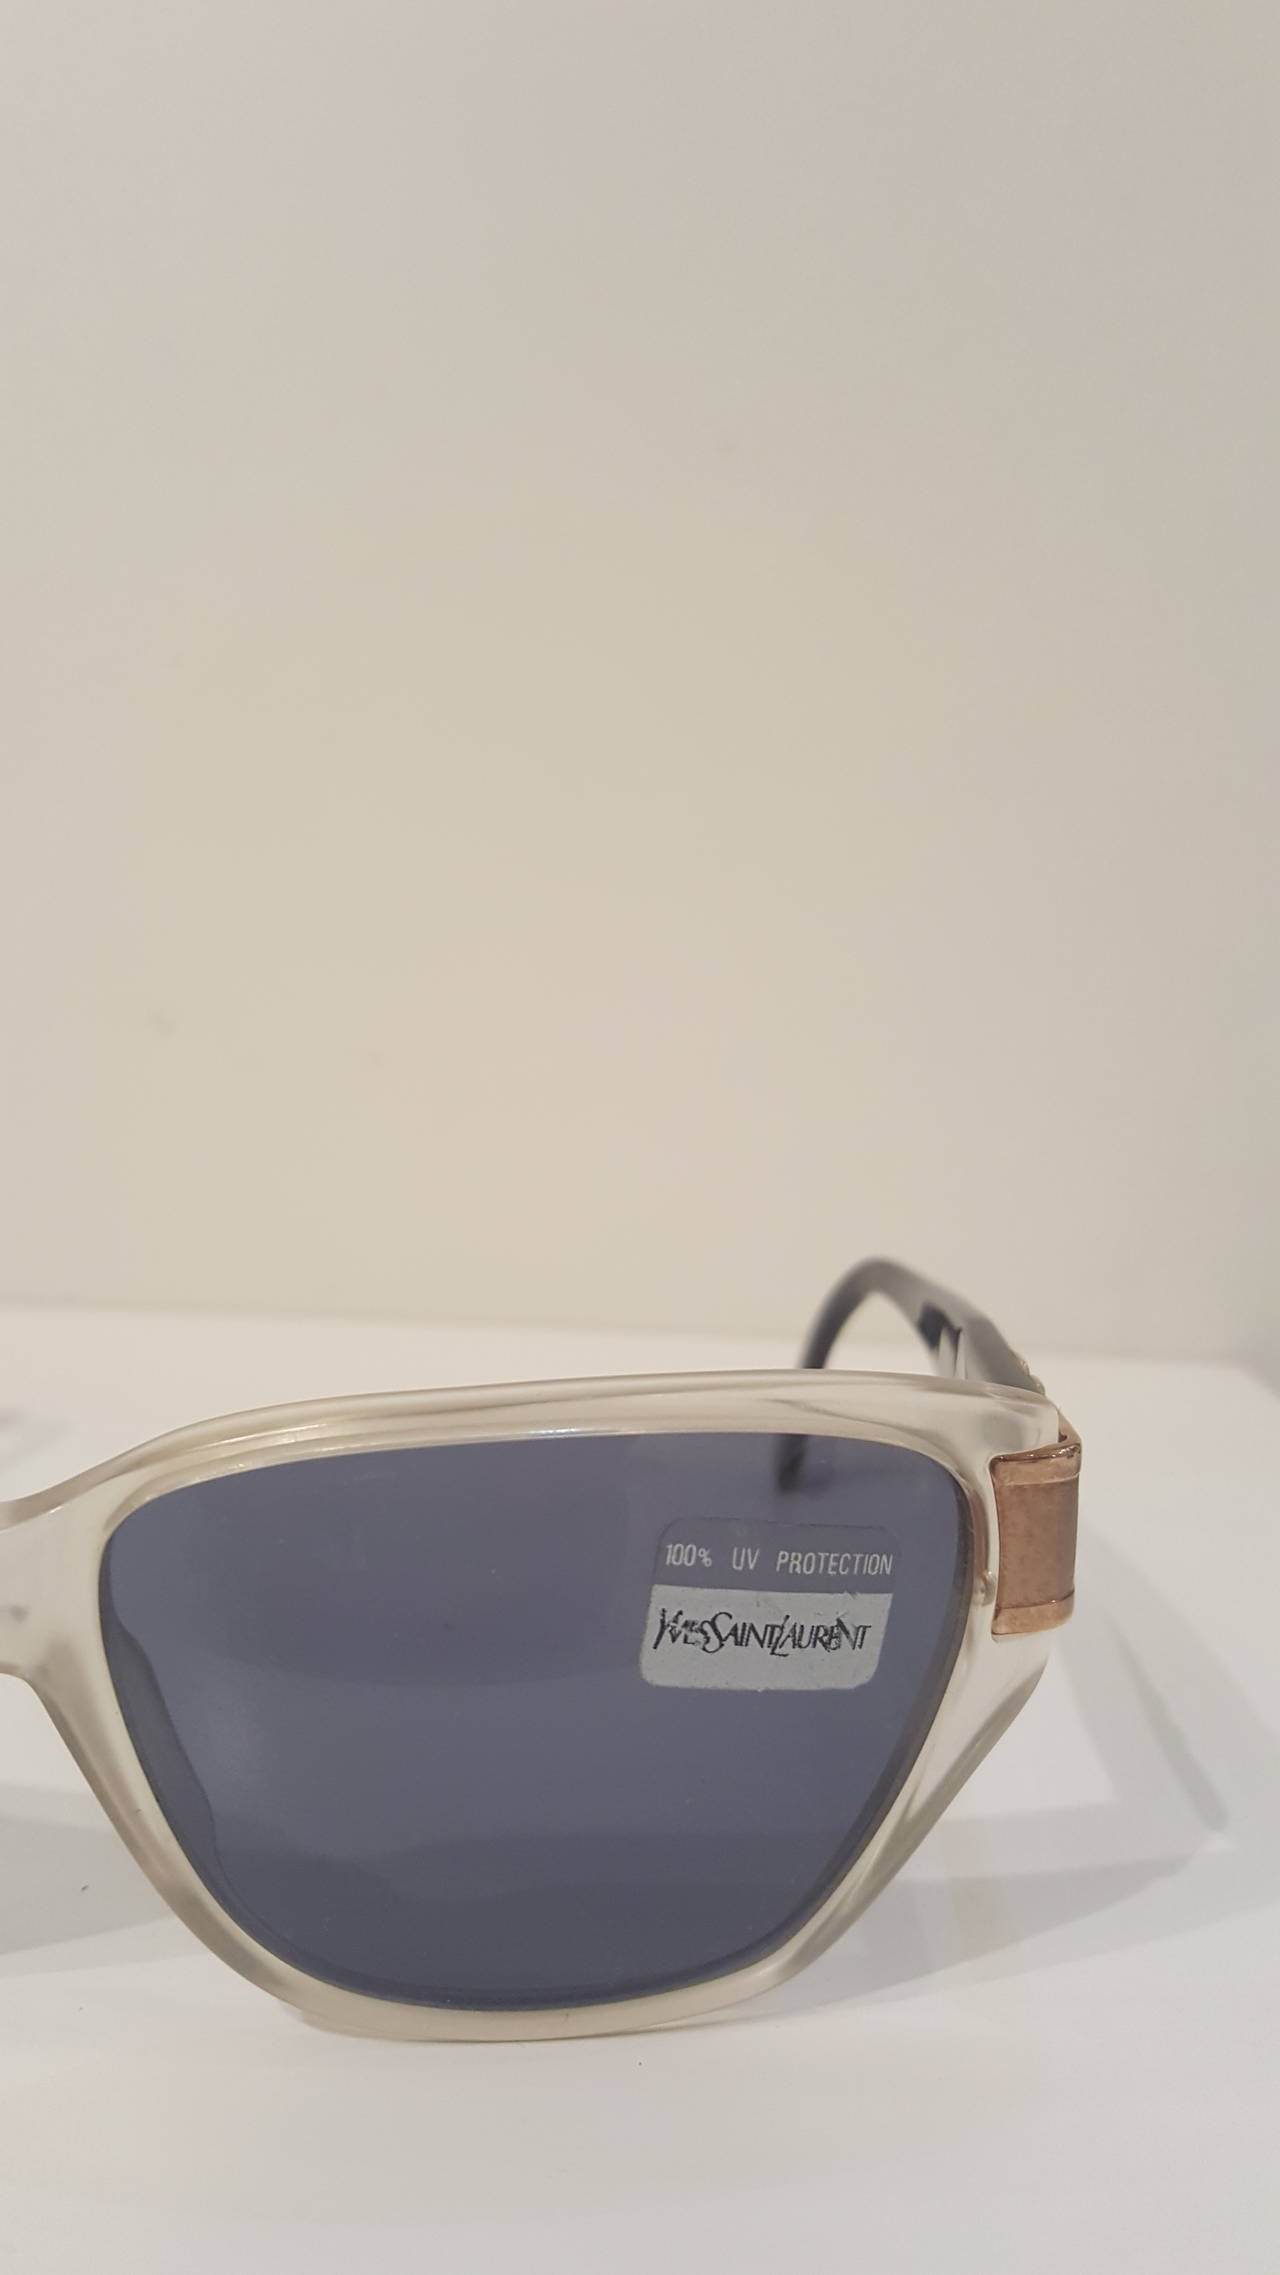 1970s Yves Saint Laurent transparent & black sunglasses never used. 100% uv protection